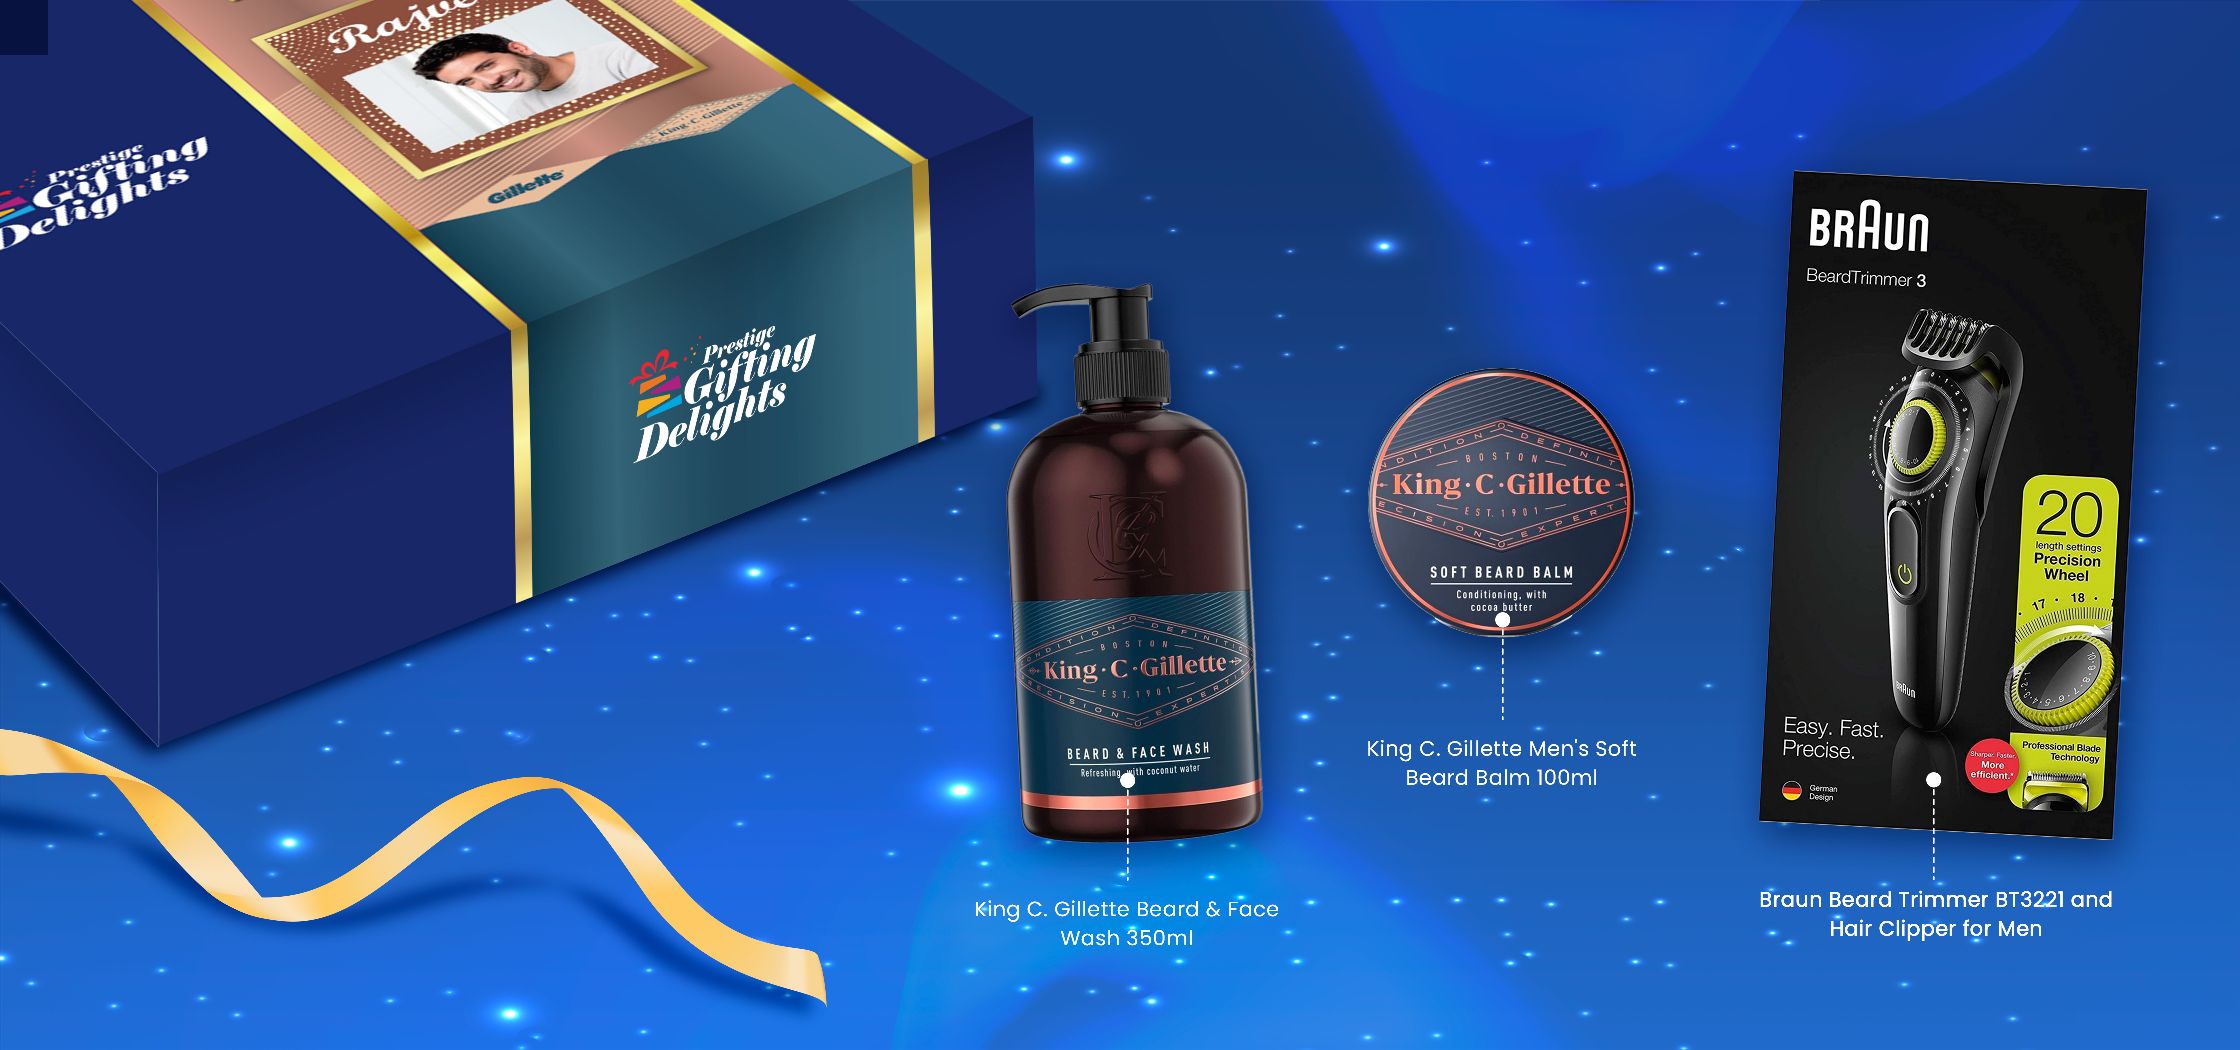 KCG + Braun Beard Grooming Corporate Gift Pack